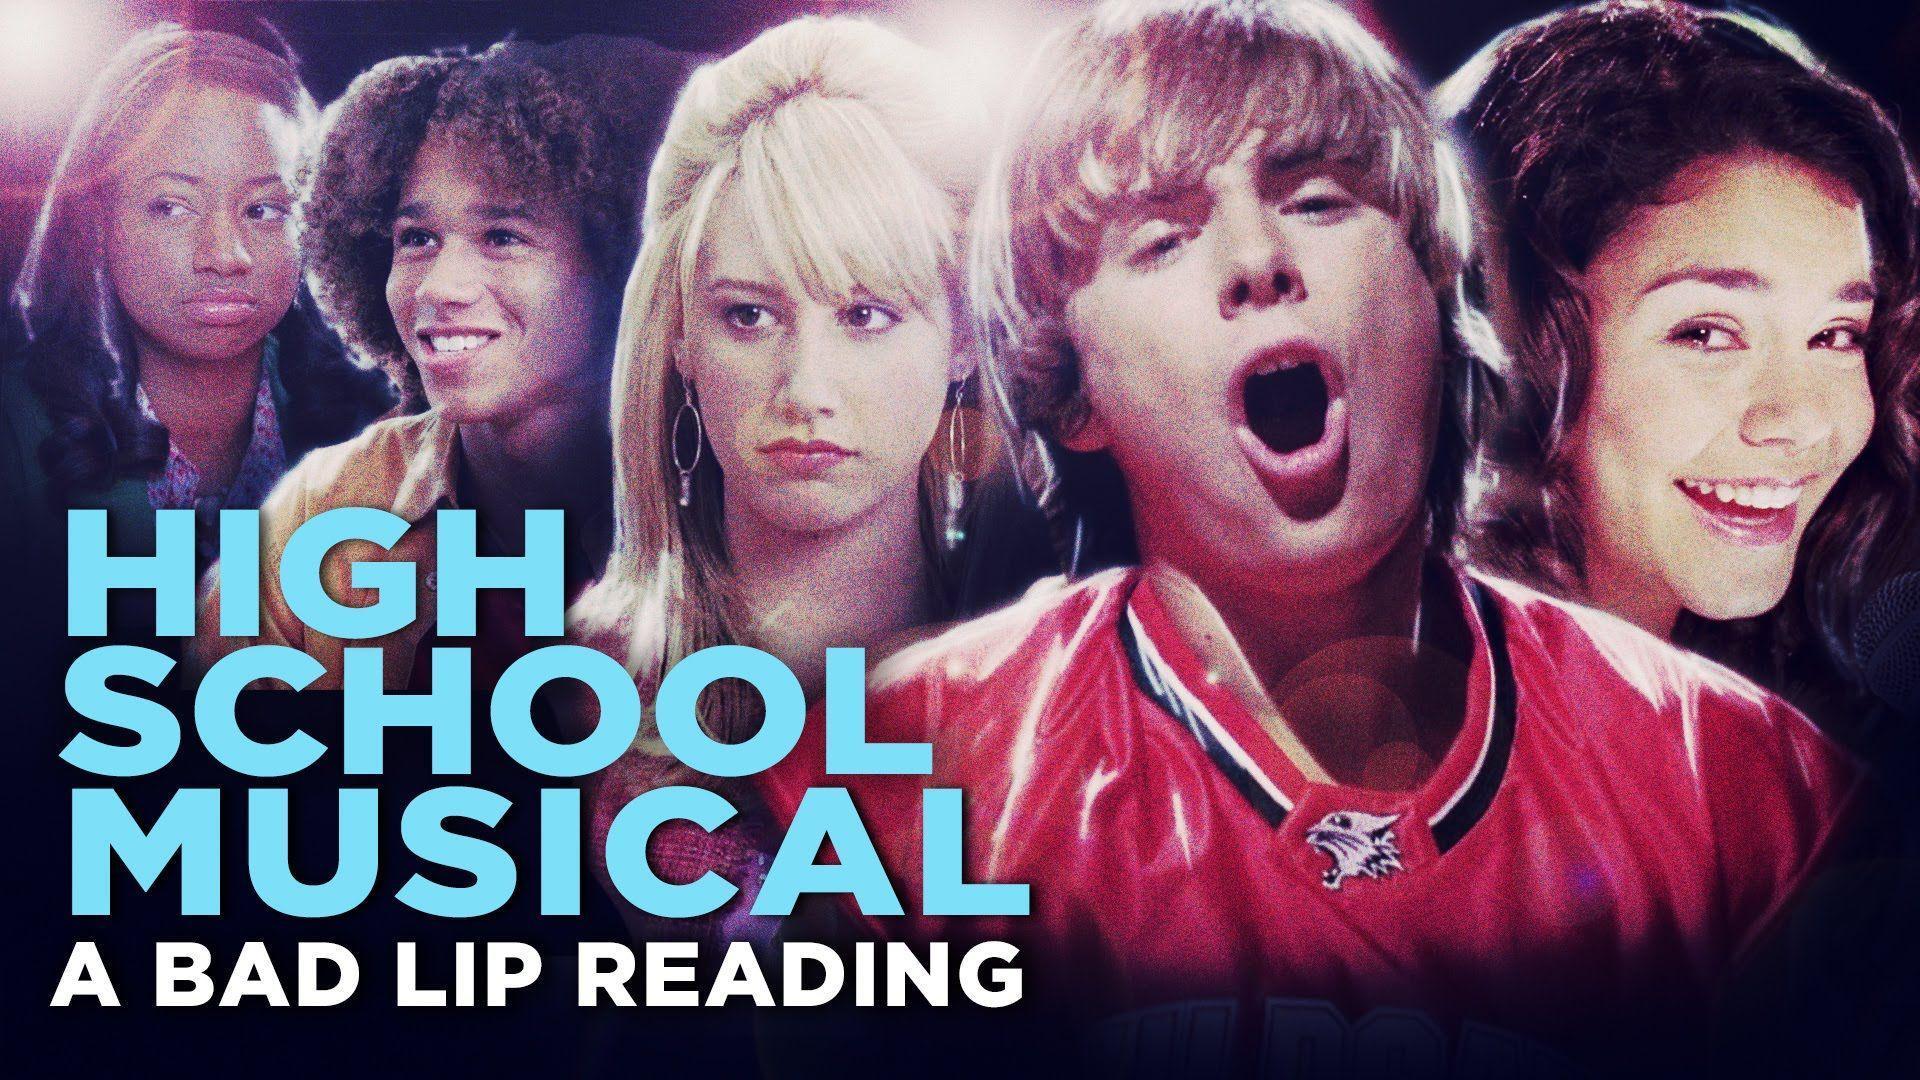 HIGH SCHOOL MUSICAL: A BAD LIP READING - Bad Lip Reading